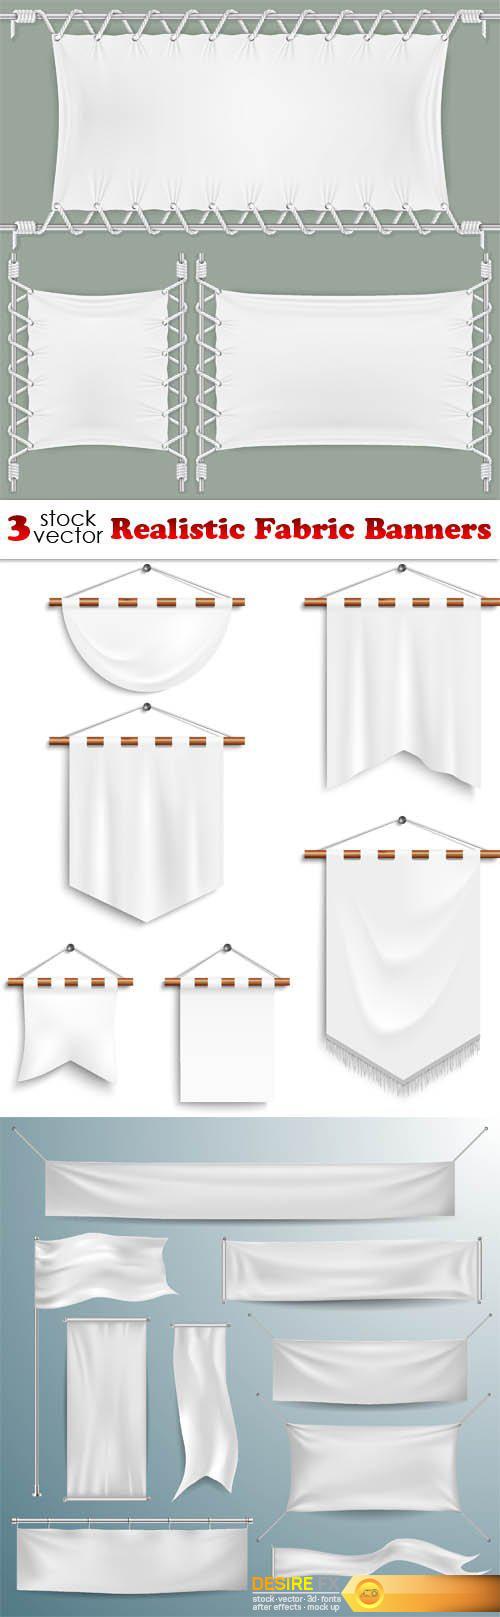 Vectors - Realistic Fabric Banners